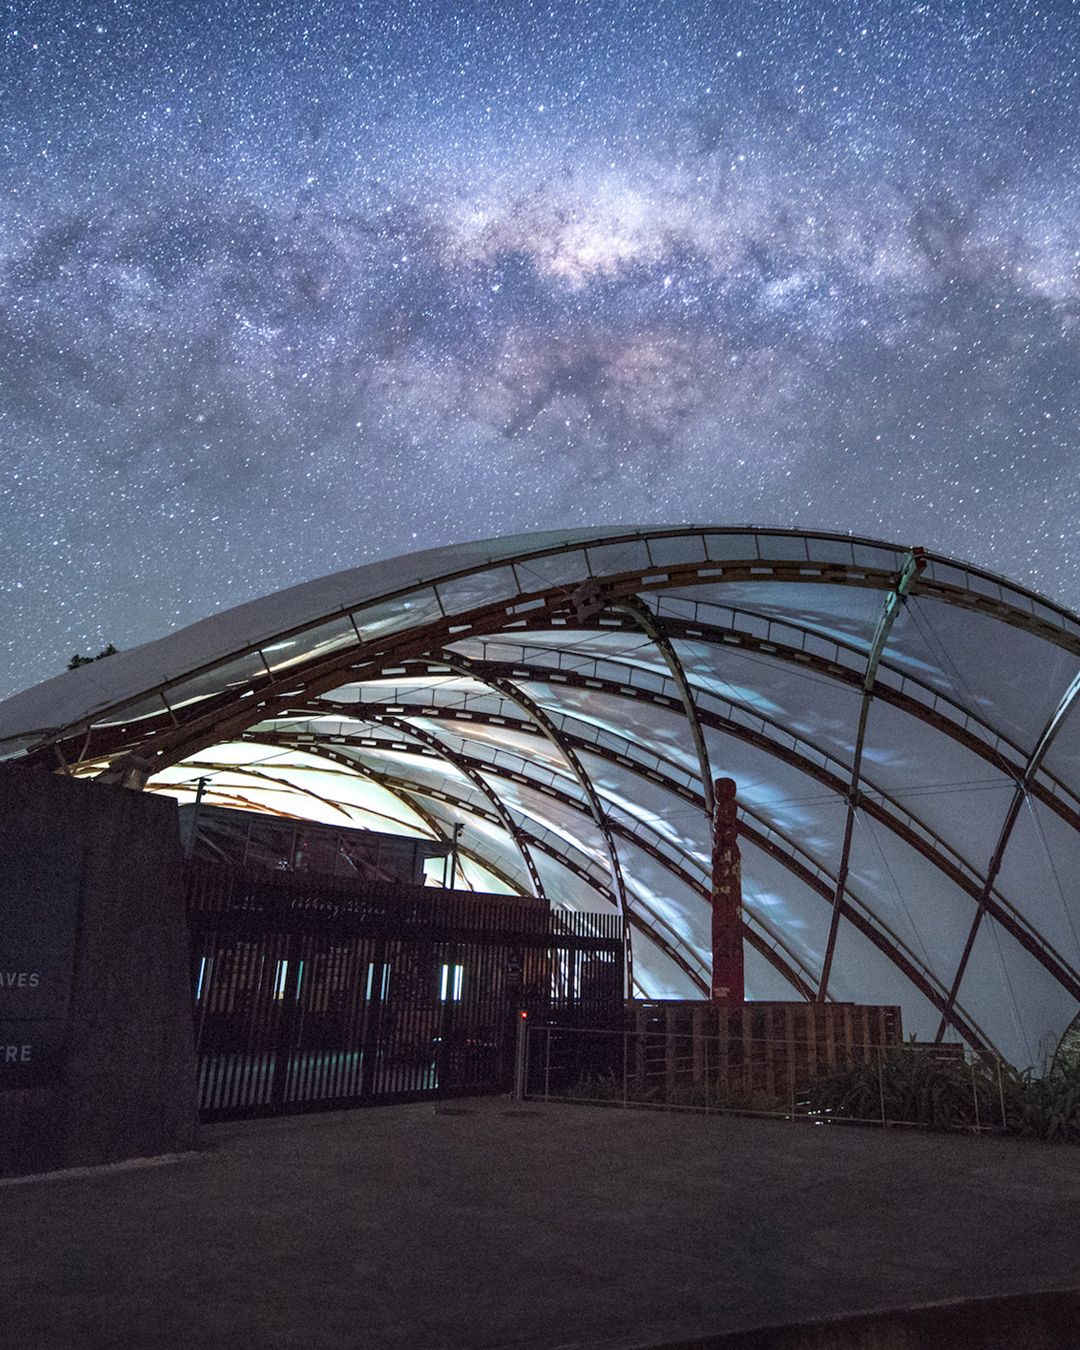 Waitomo Caves Township under a starlit sky.